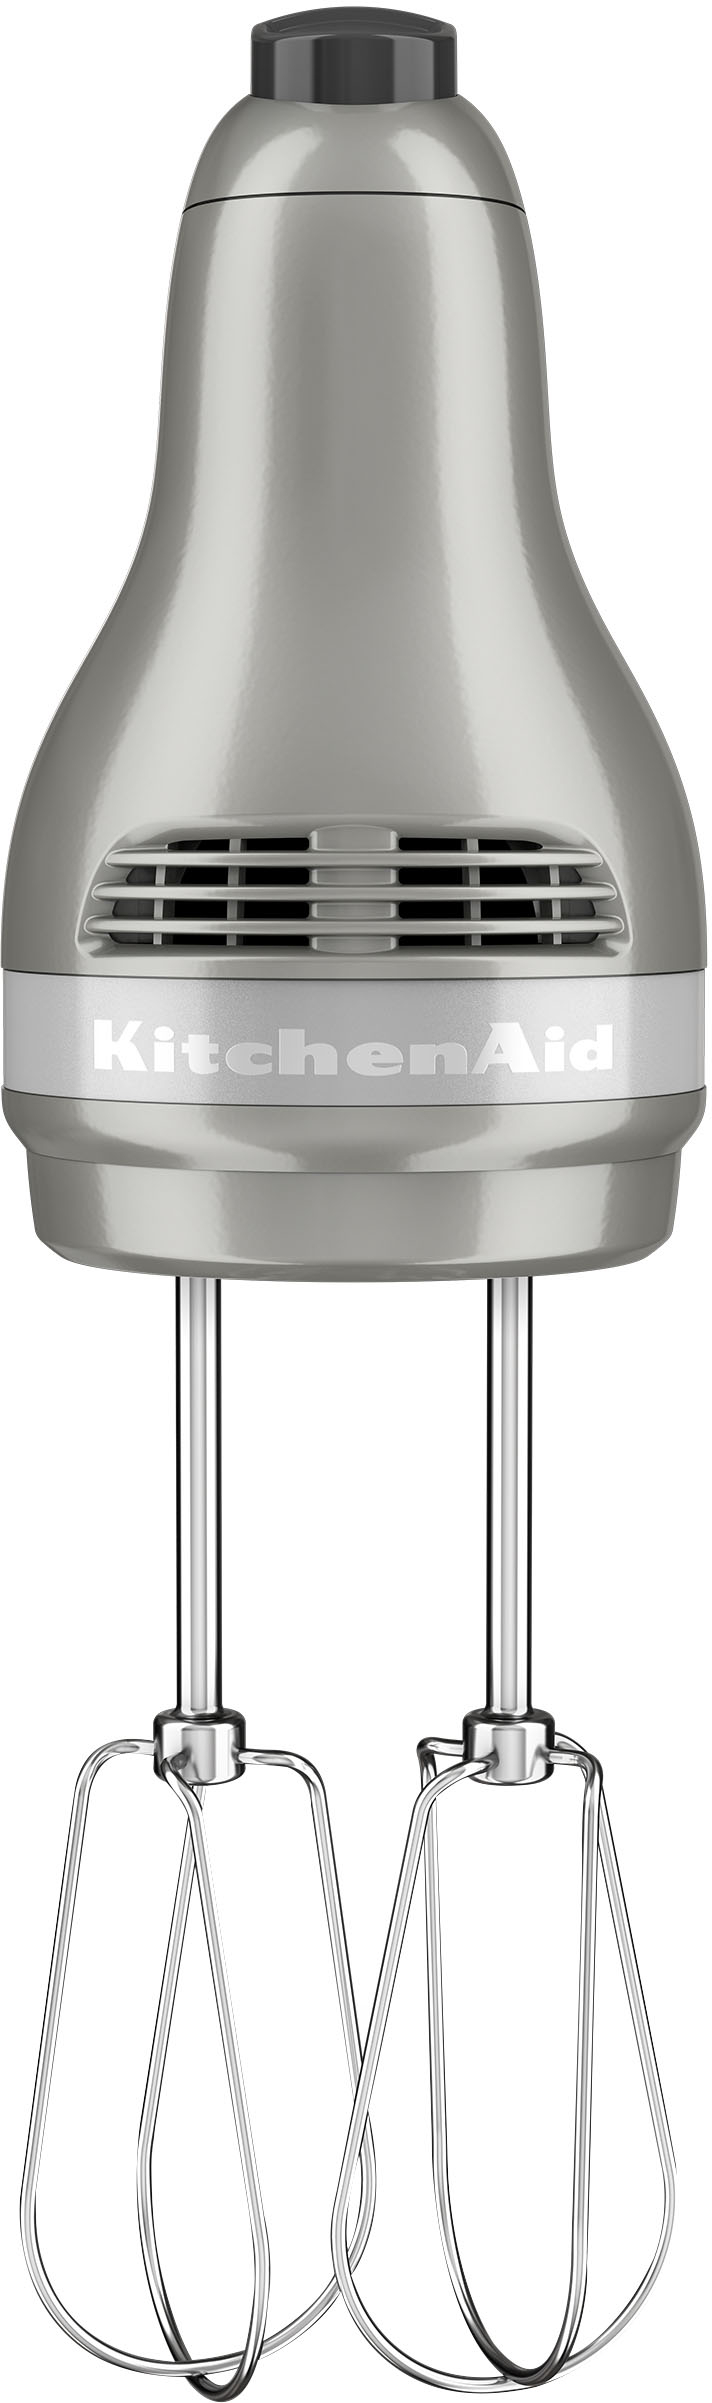 KitchenAid 5-Speed Ultra Power Hand Mixer Contour Silver KHM512CU - Best Buy